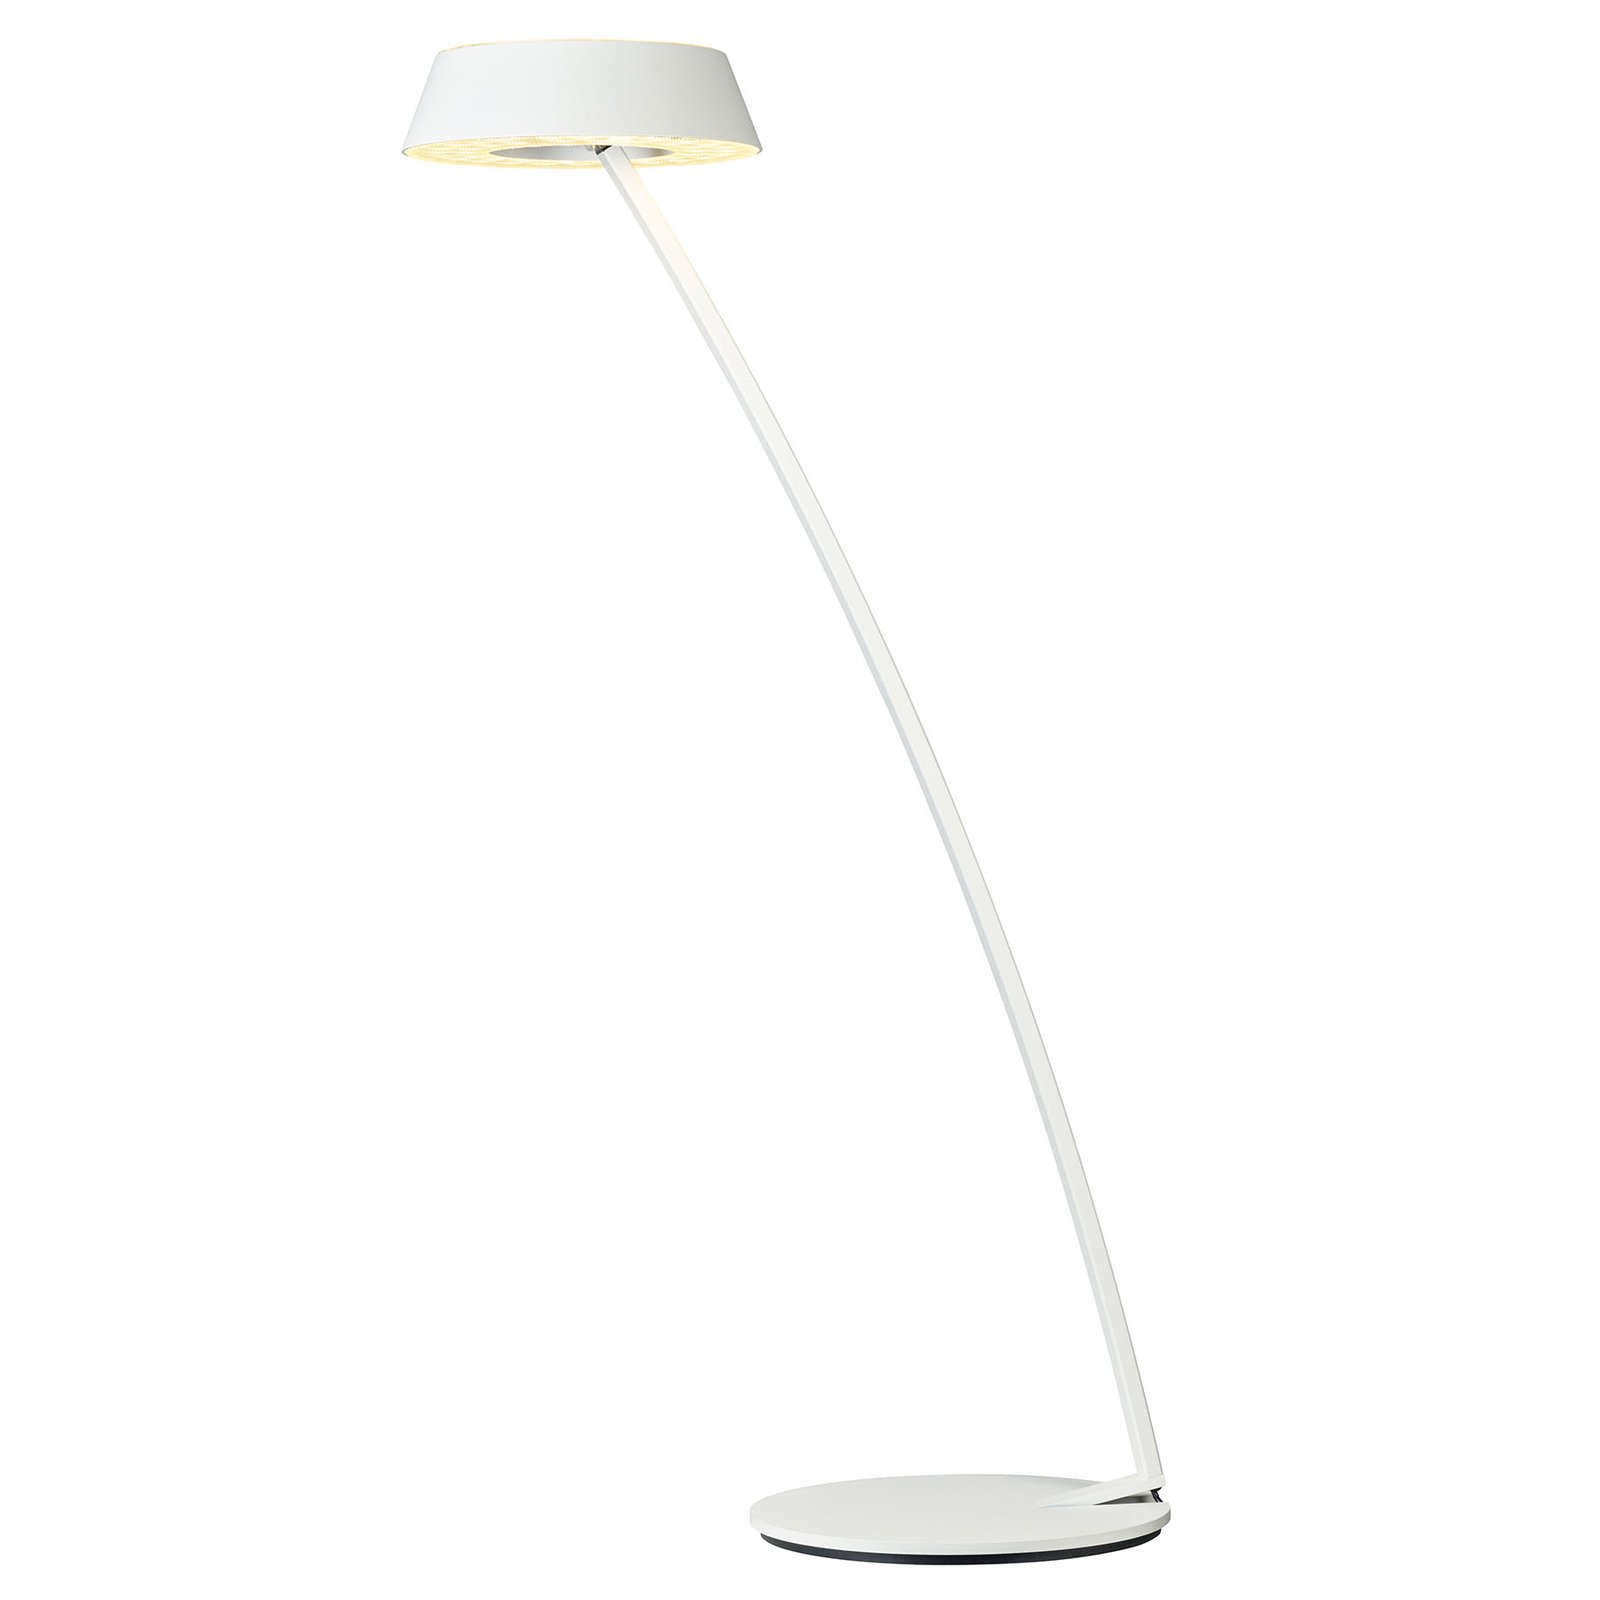 OLIGO Glance LED table lamp curved matt white